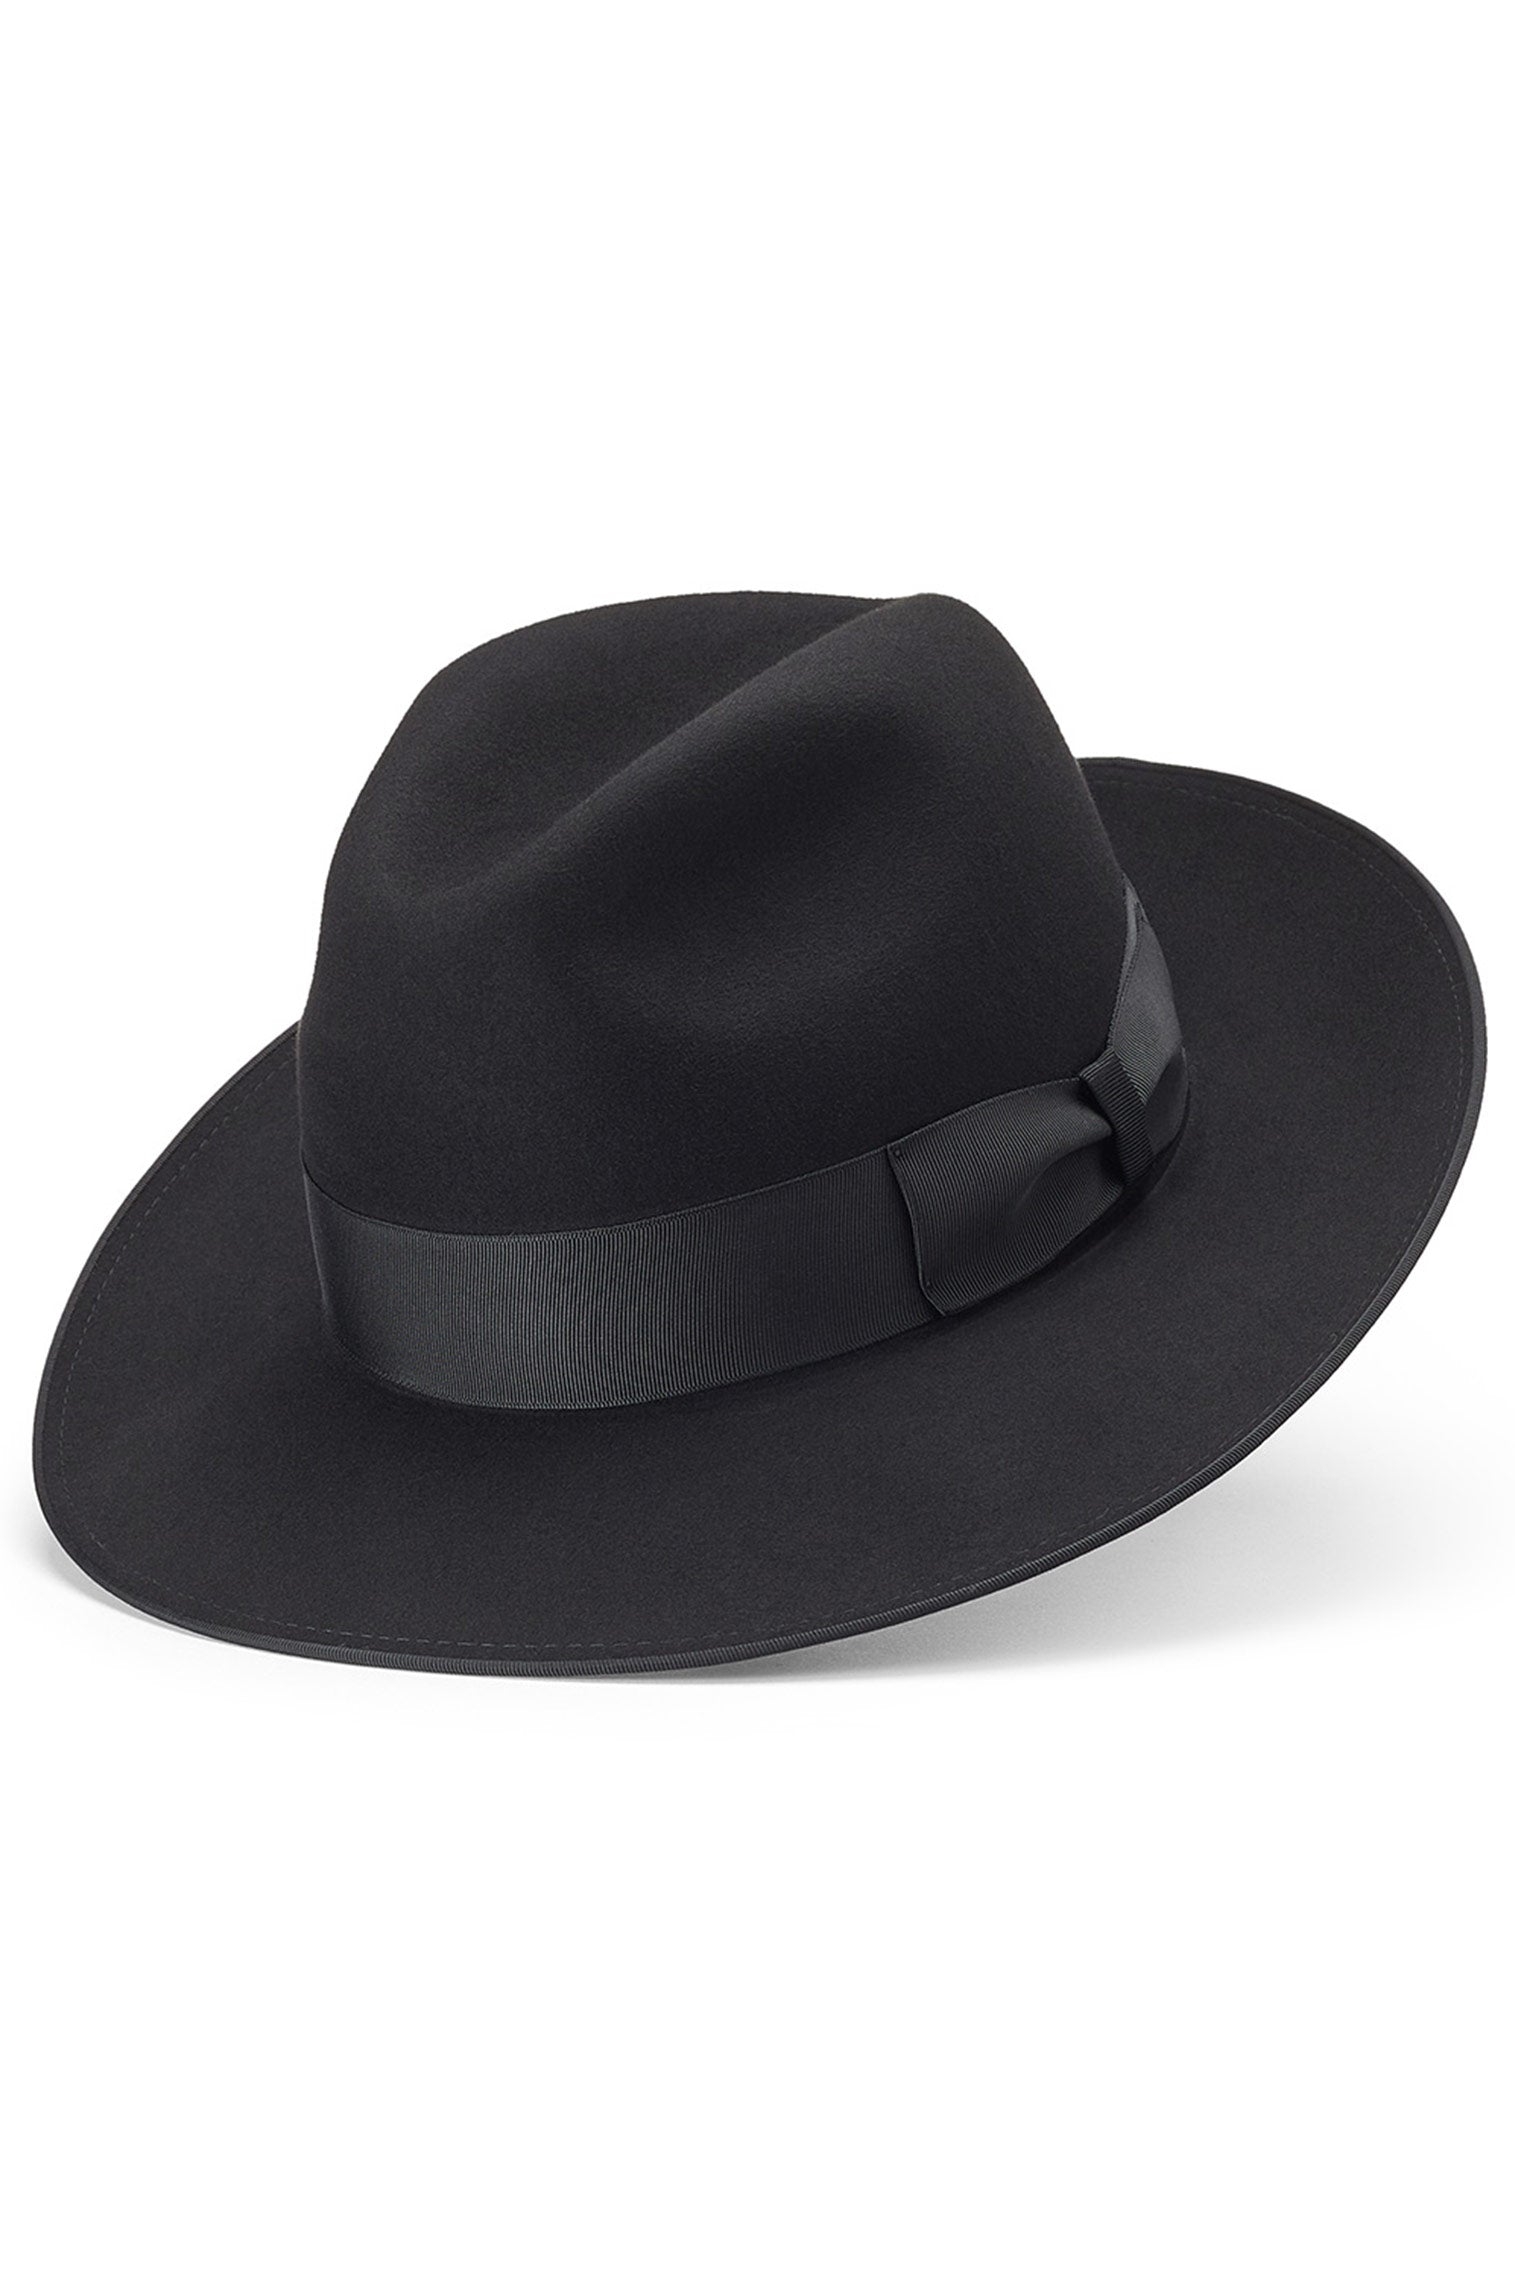 St James's Black Fedora - Men's Hats - Lock & Co. Hatters London UK